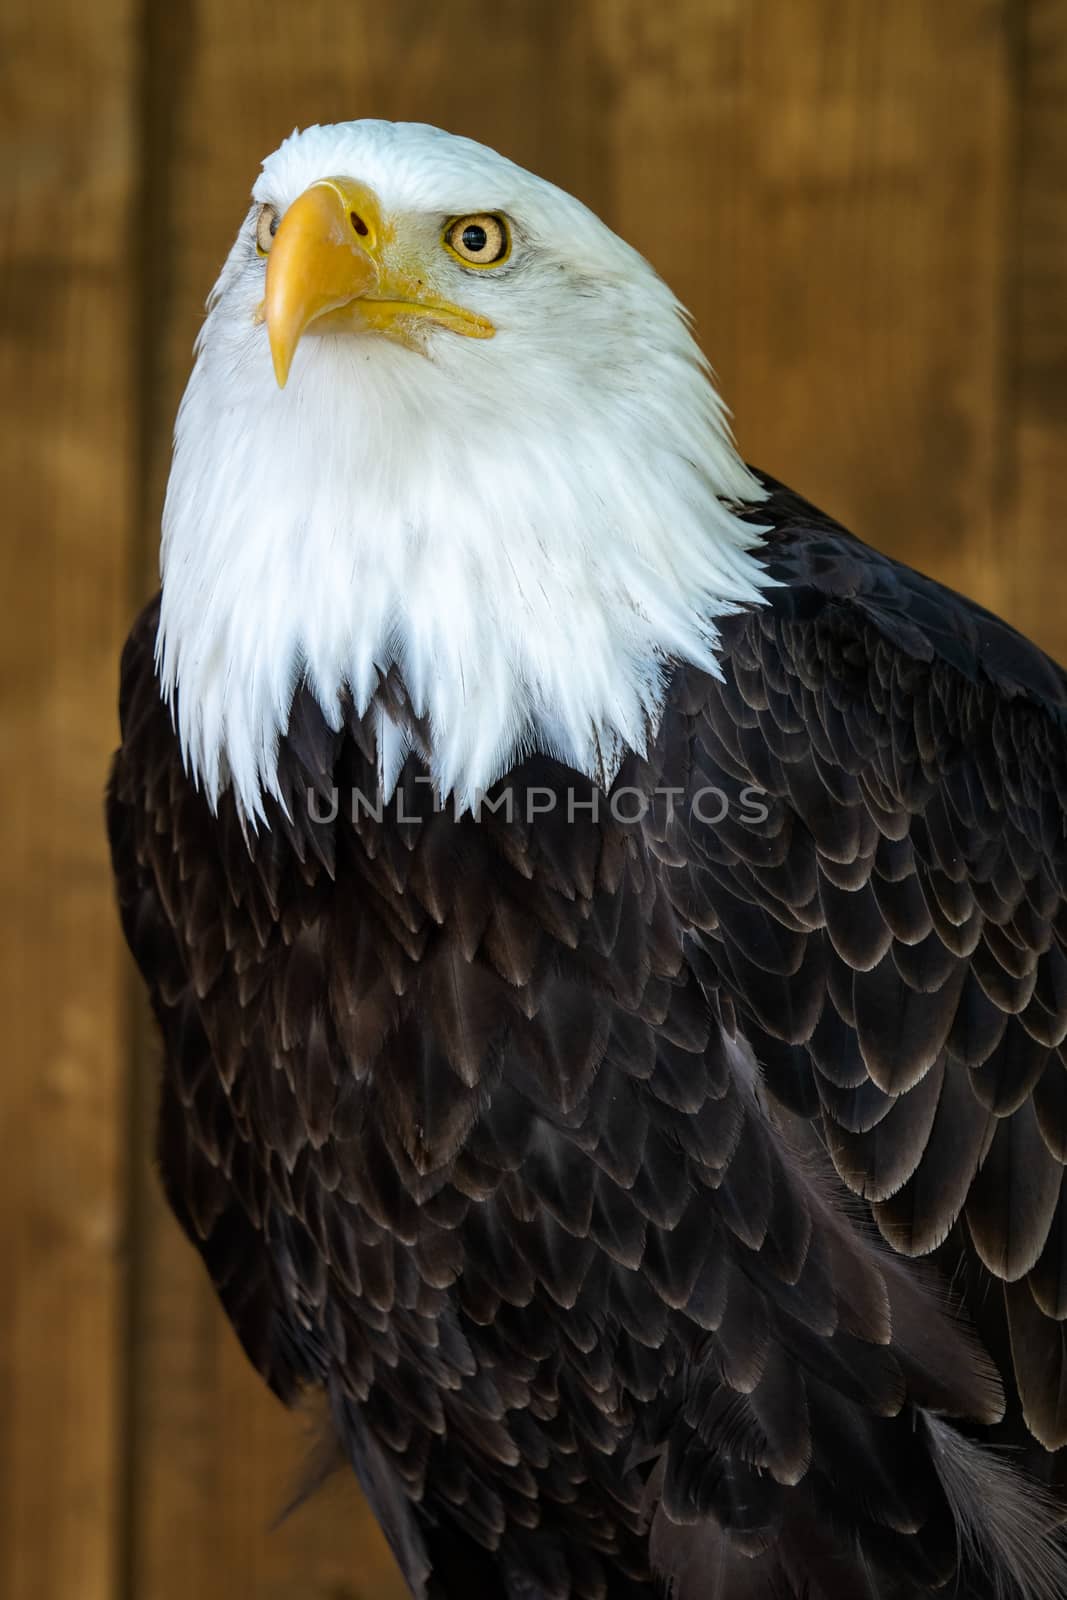 Portrait of a bald eagle (Haliaeetus leucocephalus) on brown background